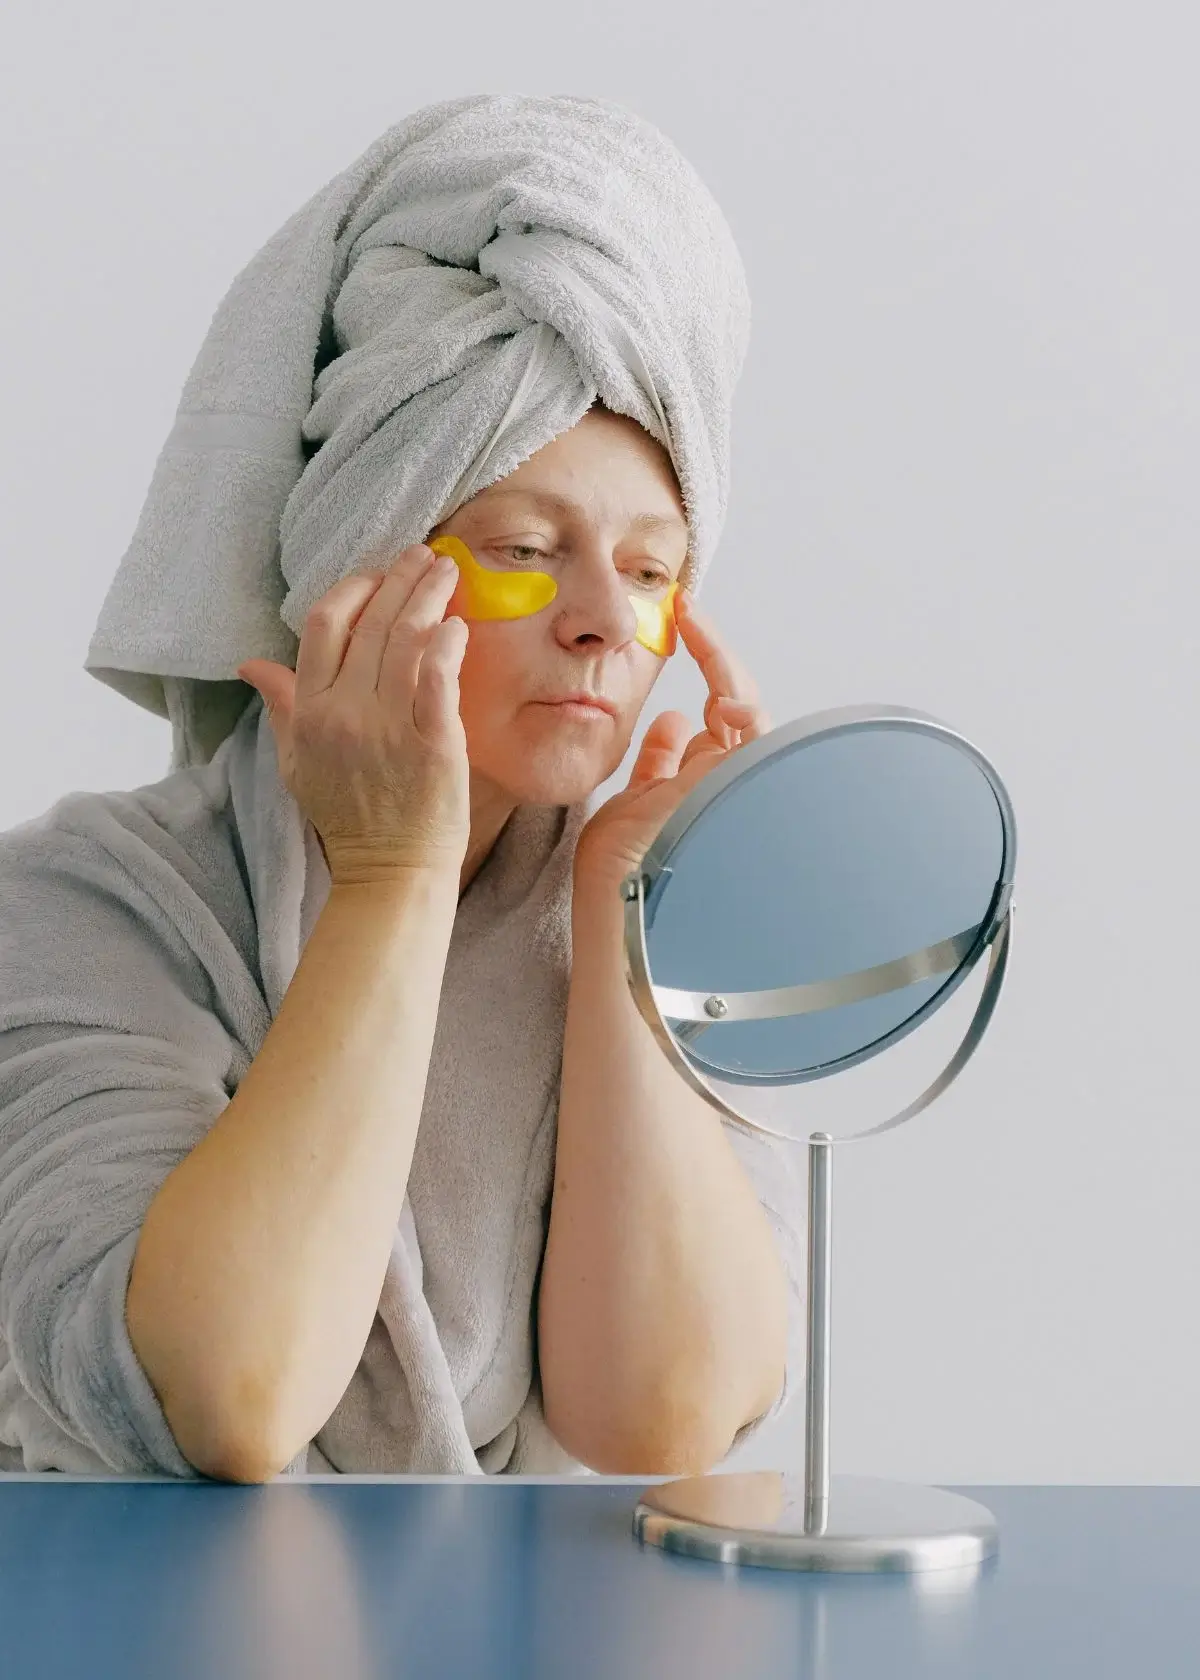 How to make homemade face masks for sensitive skin?